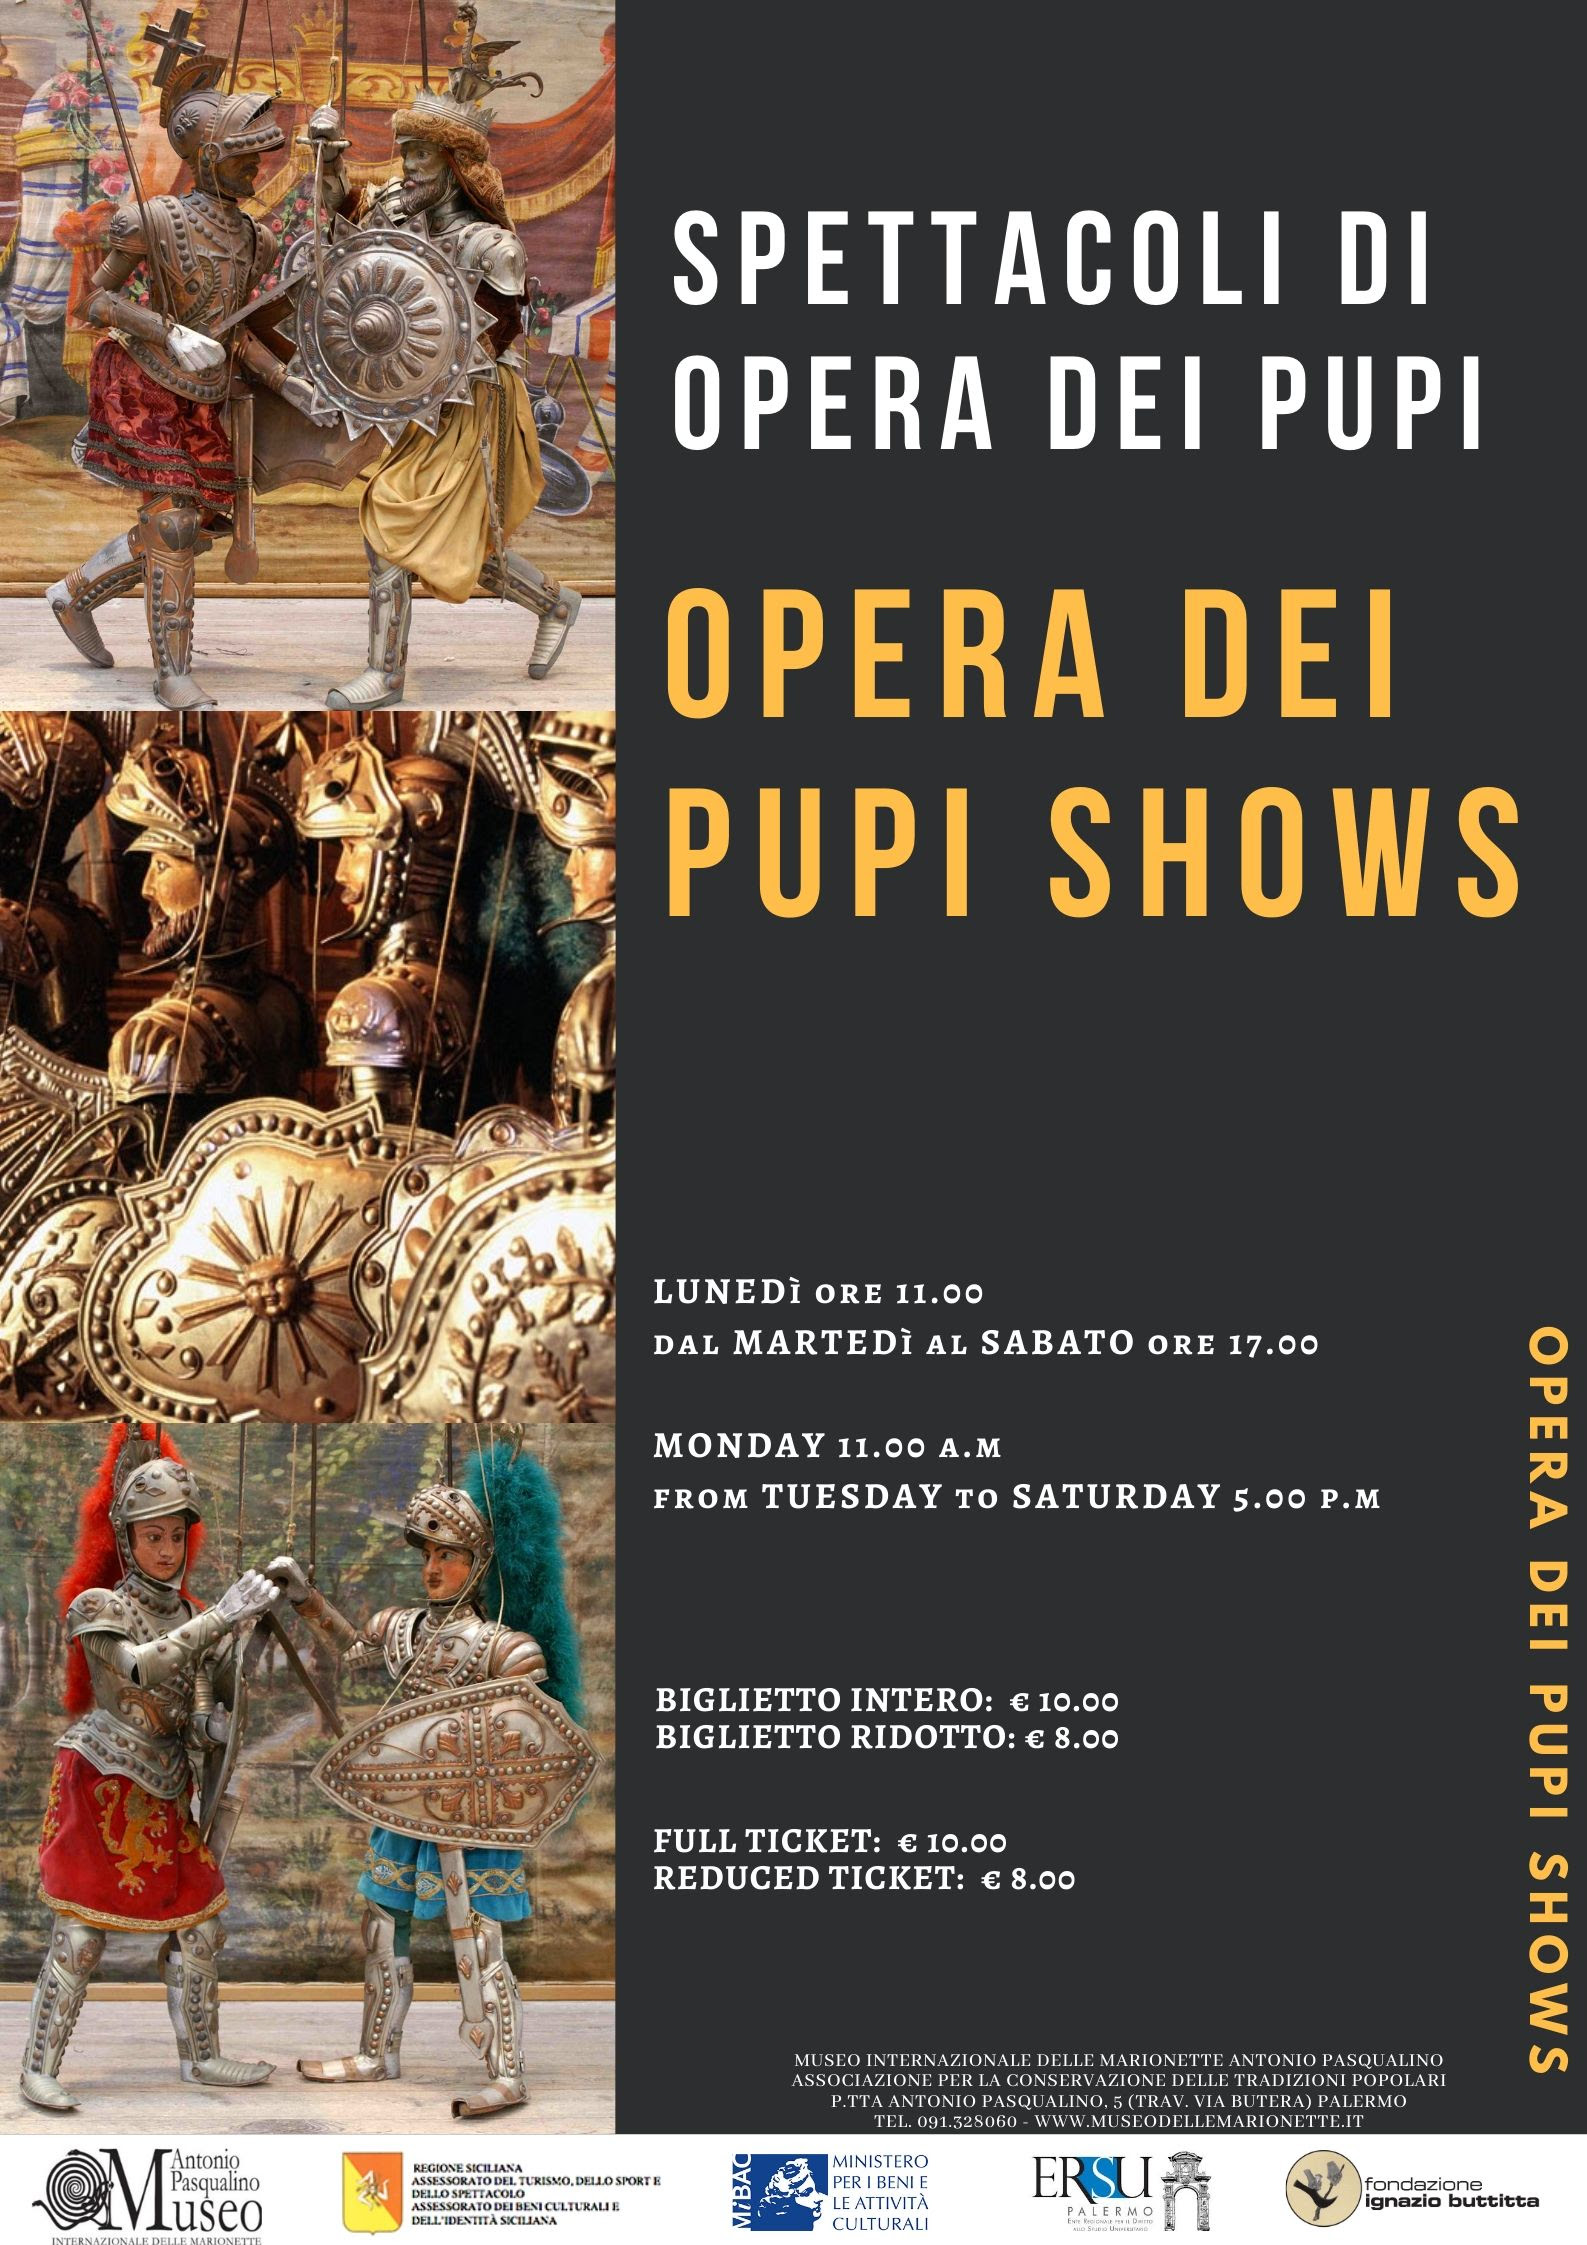 Opera
pupi shows